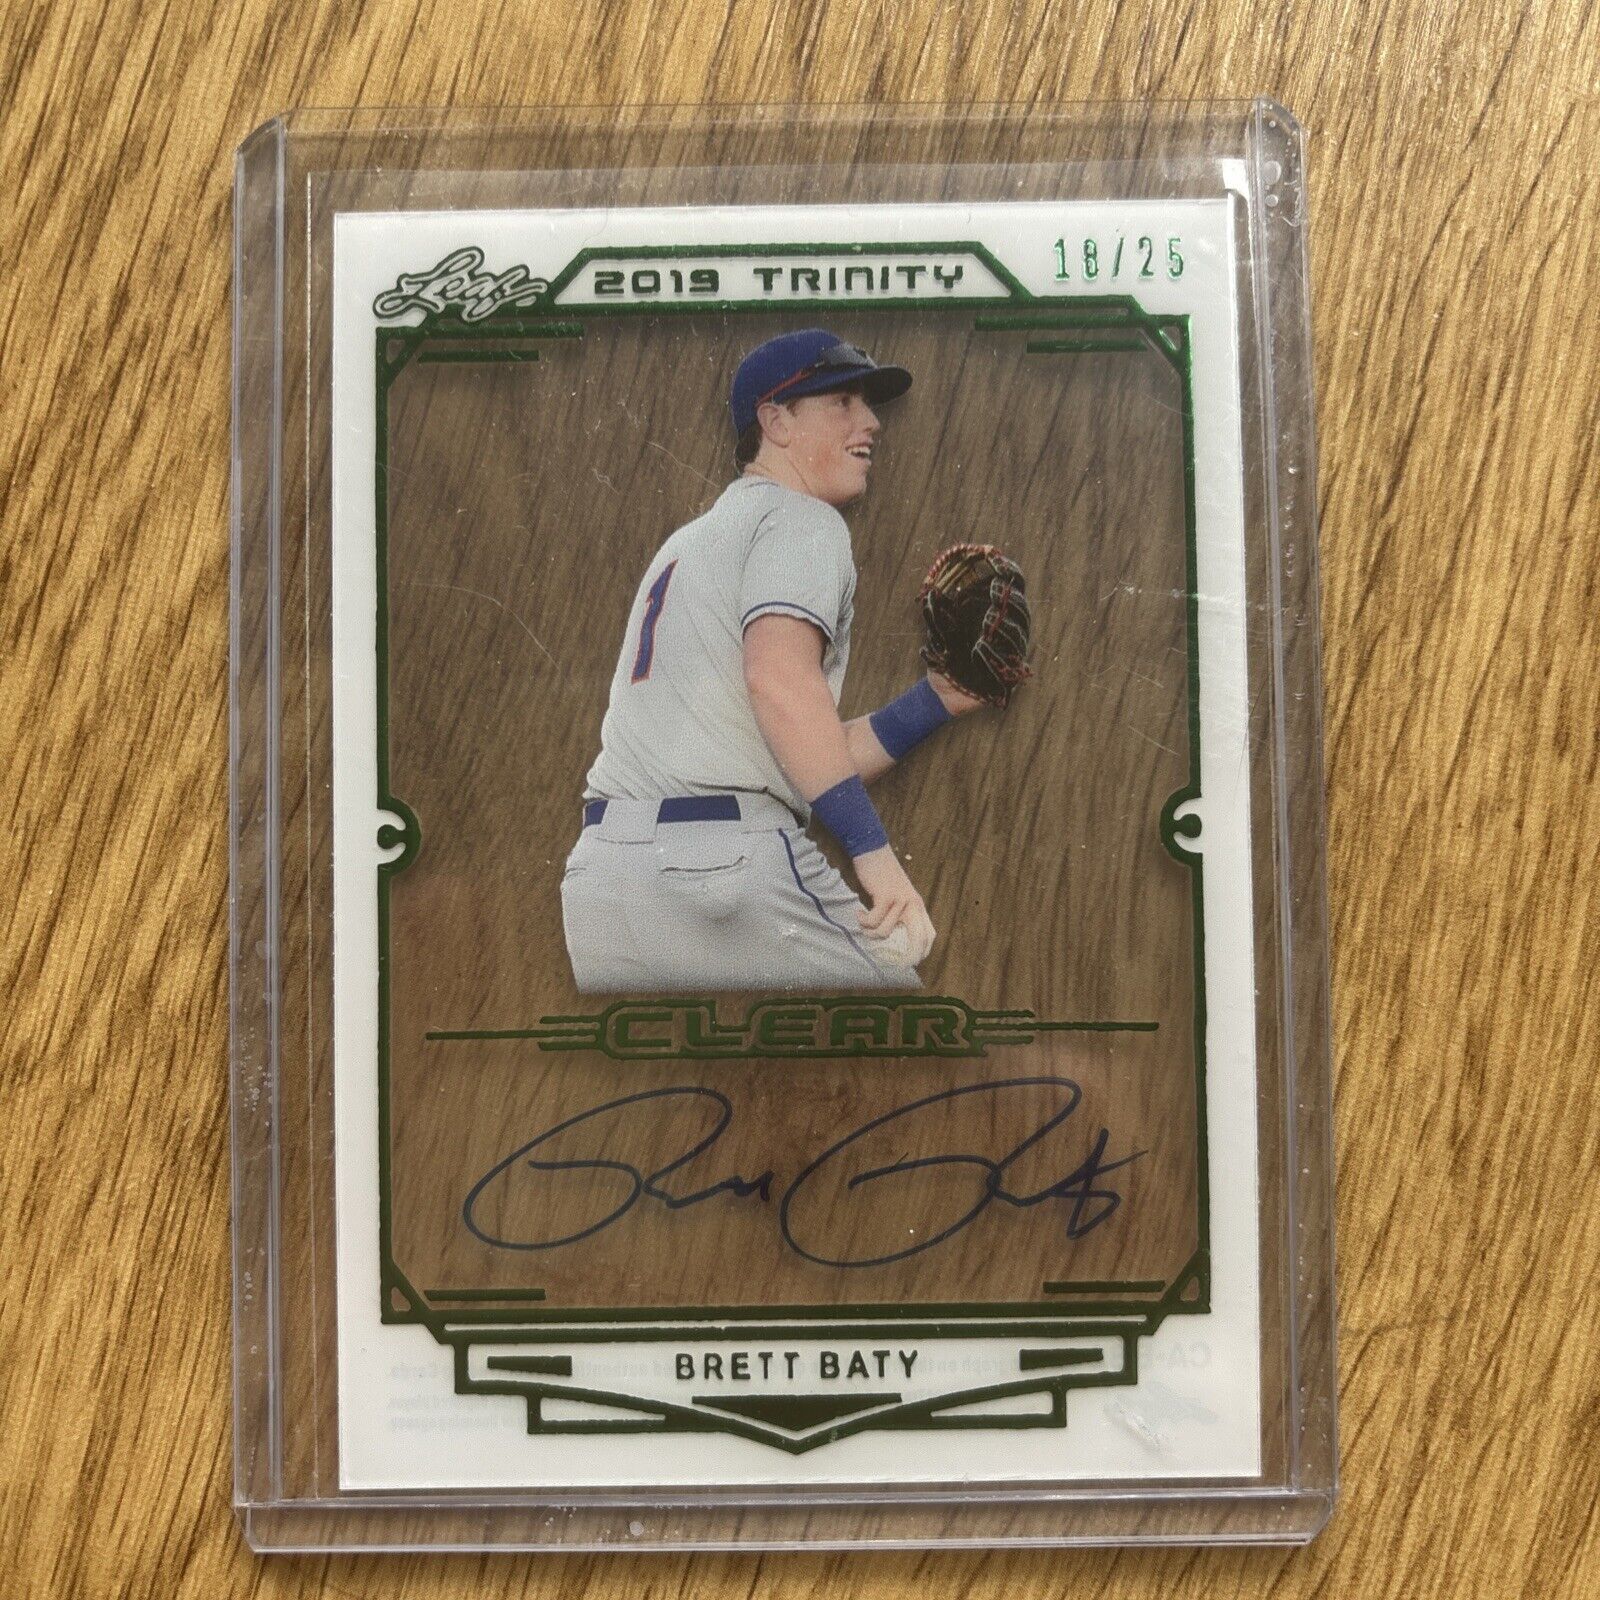 2019 Leaf Trinity Baseball Clear Autograph Auto Brett Baty 18/25 Mets